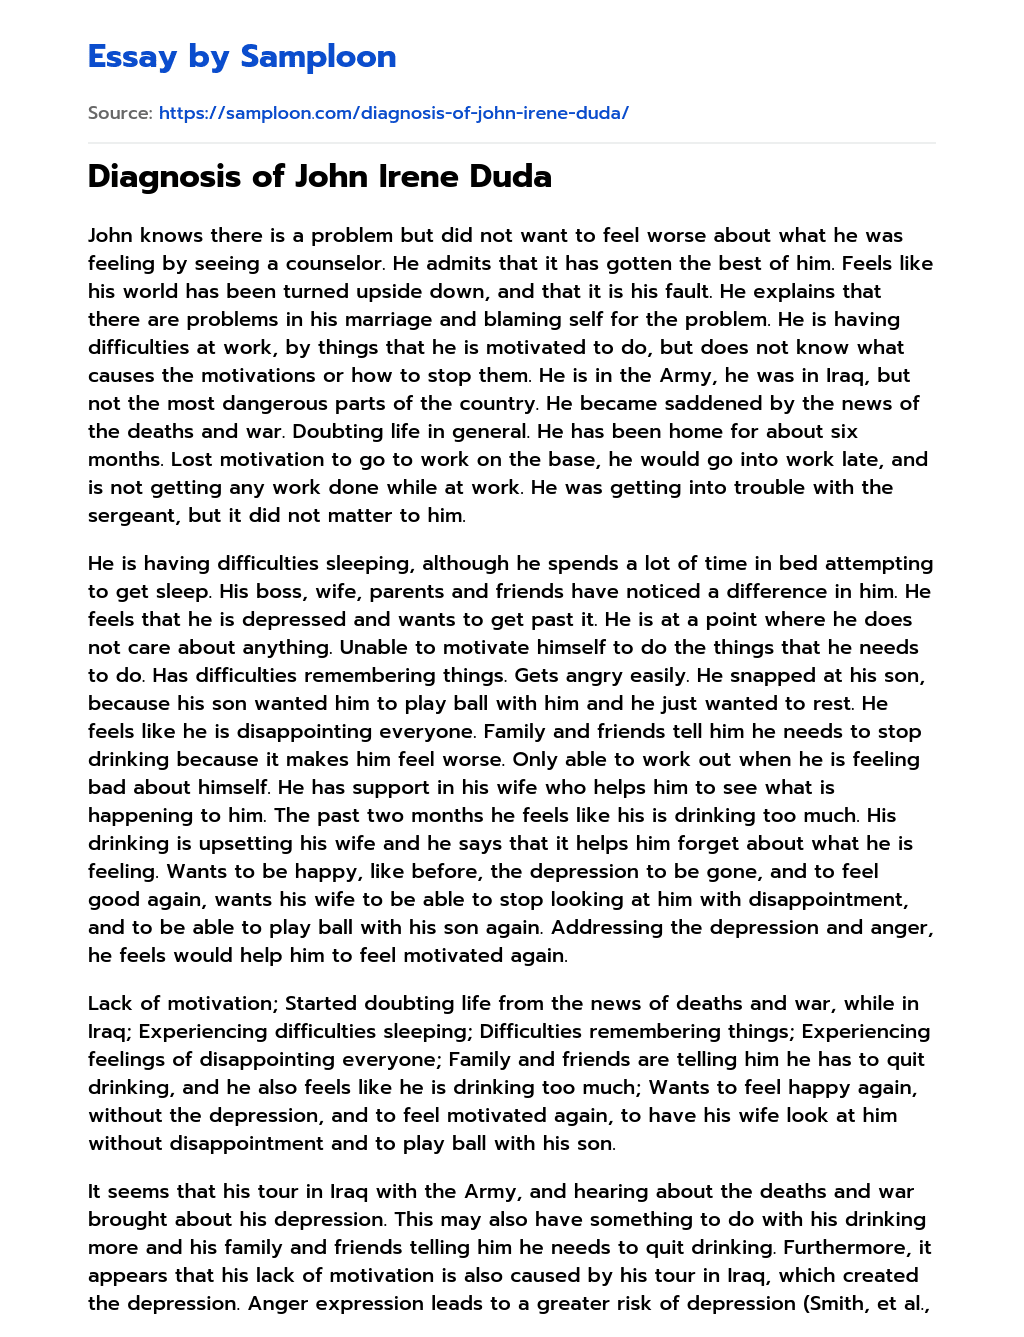 Diagnosis of John Irene Duda essay